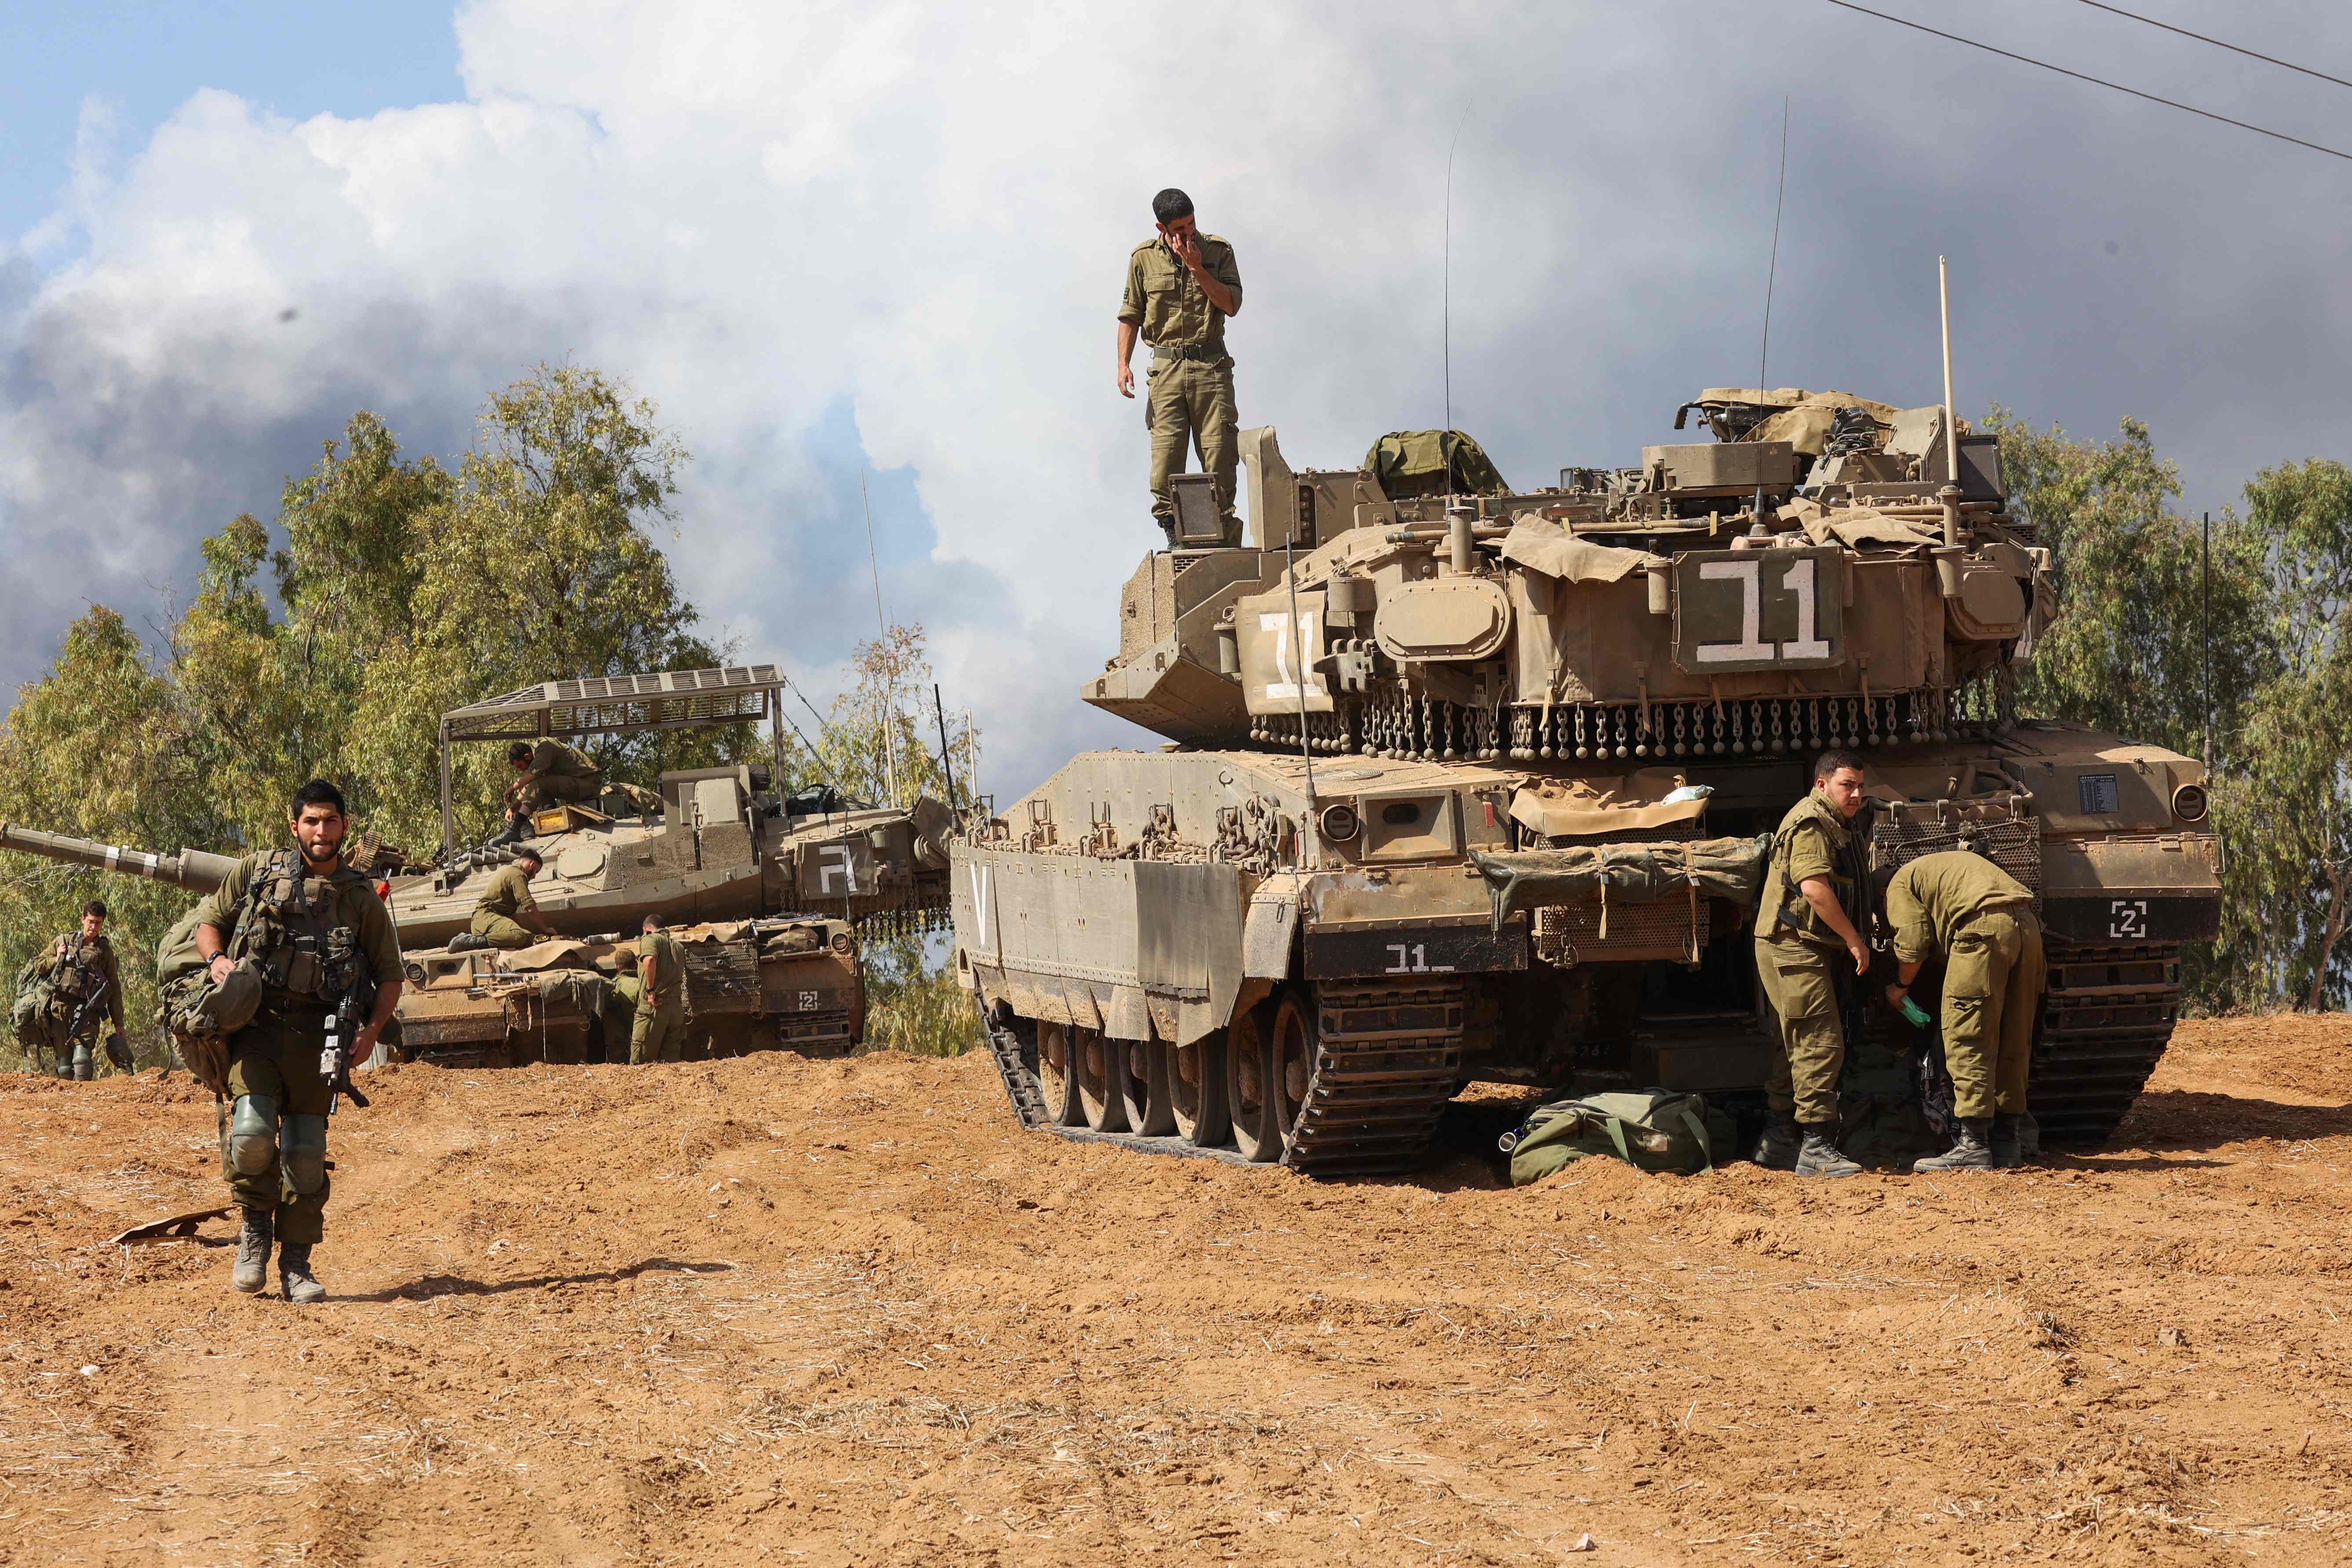 Israeli army personnel prepare for battle near Ashkelon on Sunday